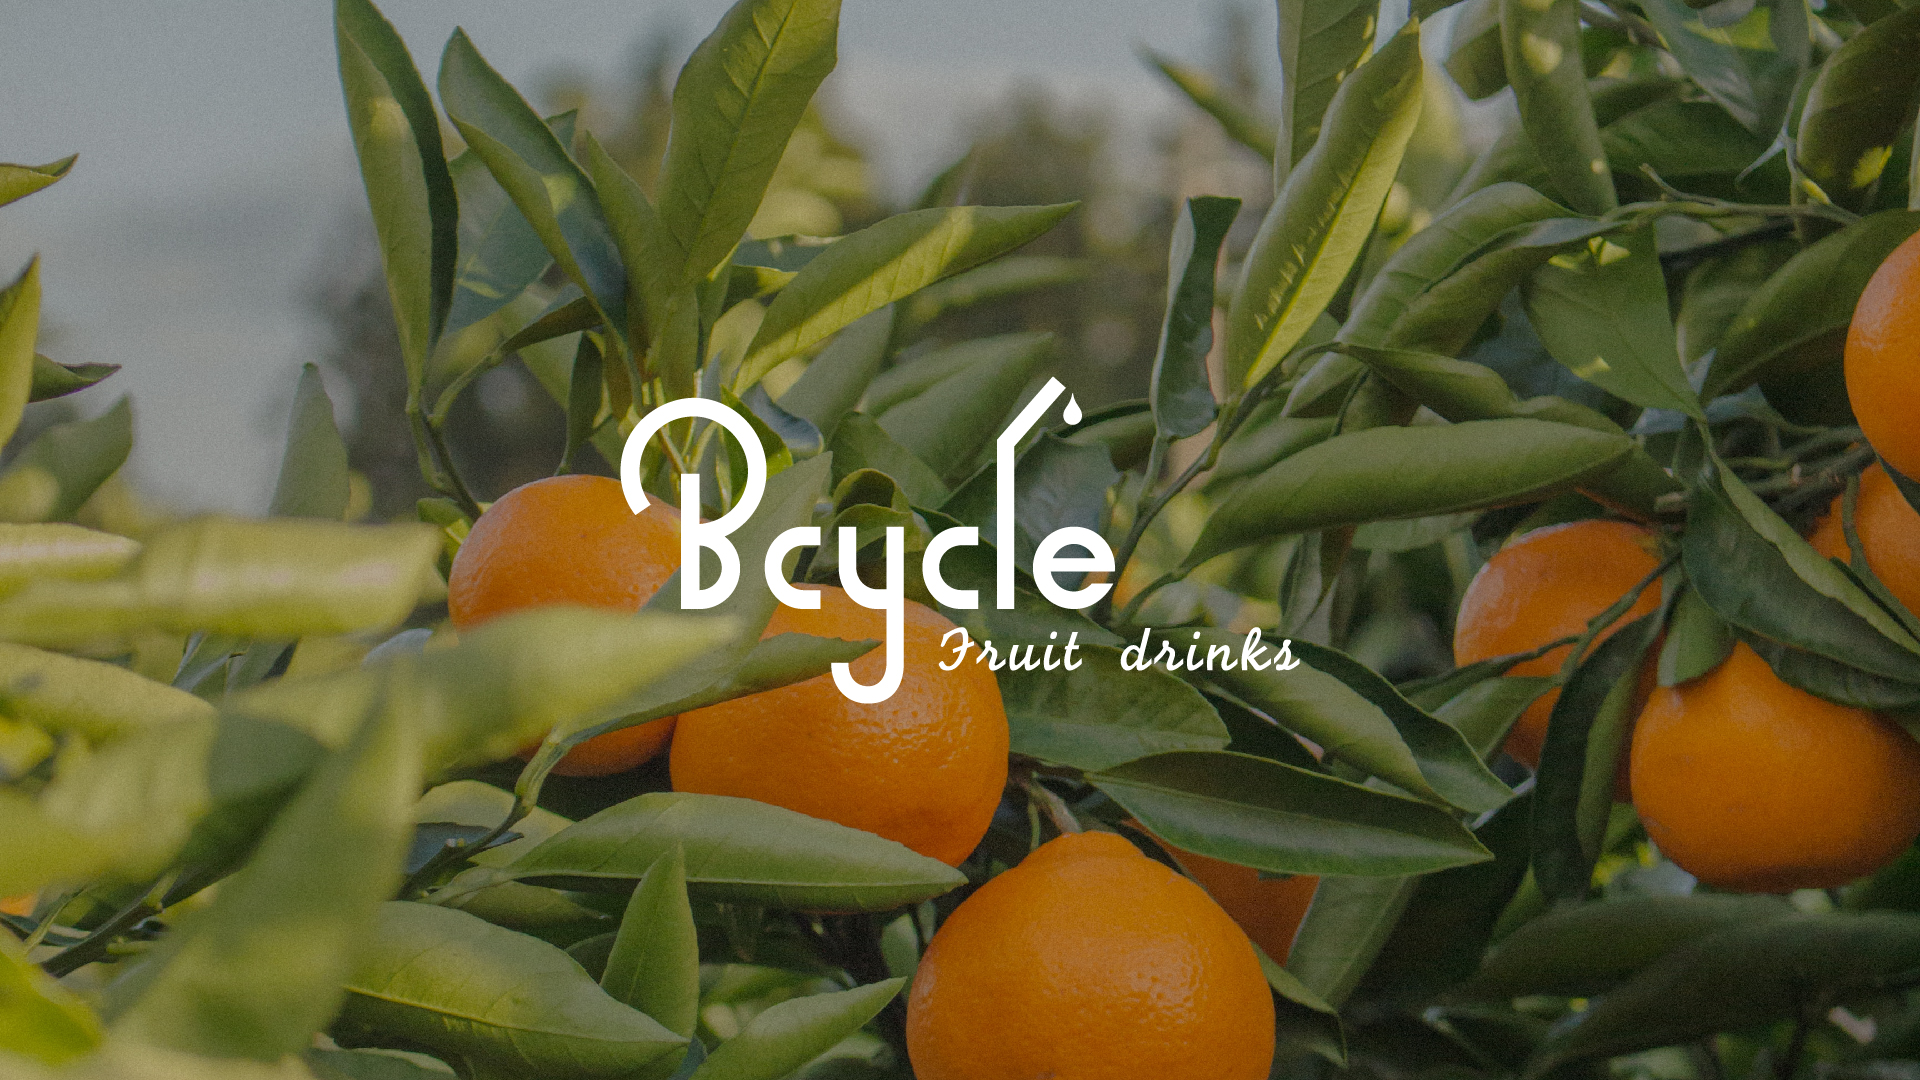 Bcycle水果饮料logo设计